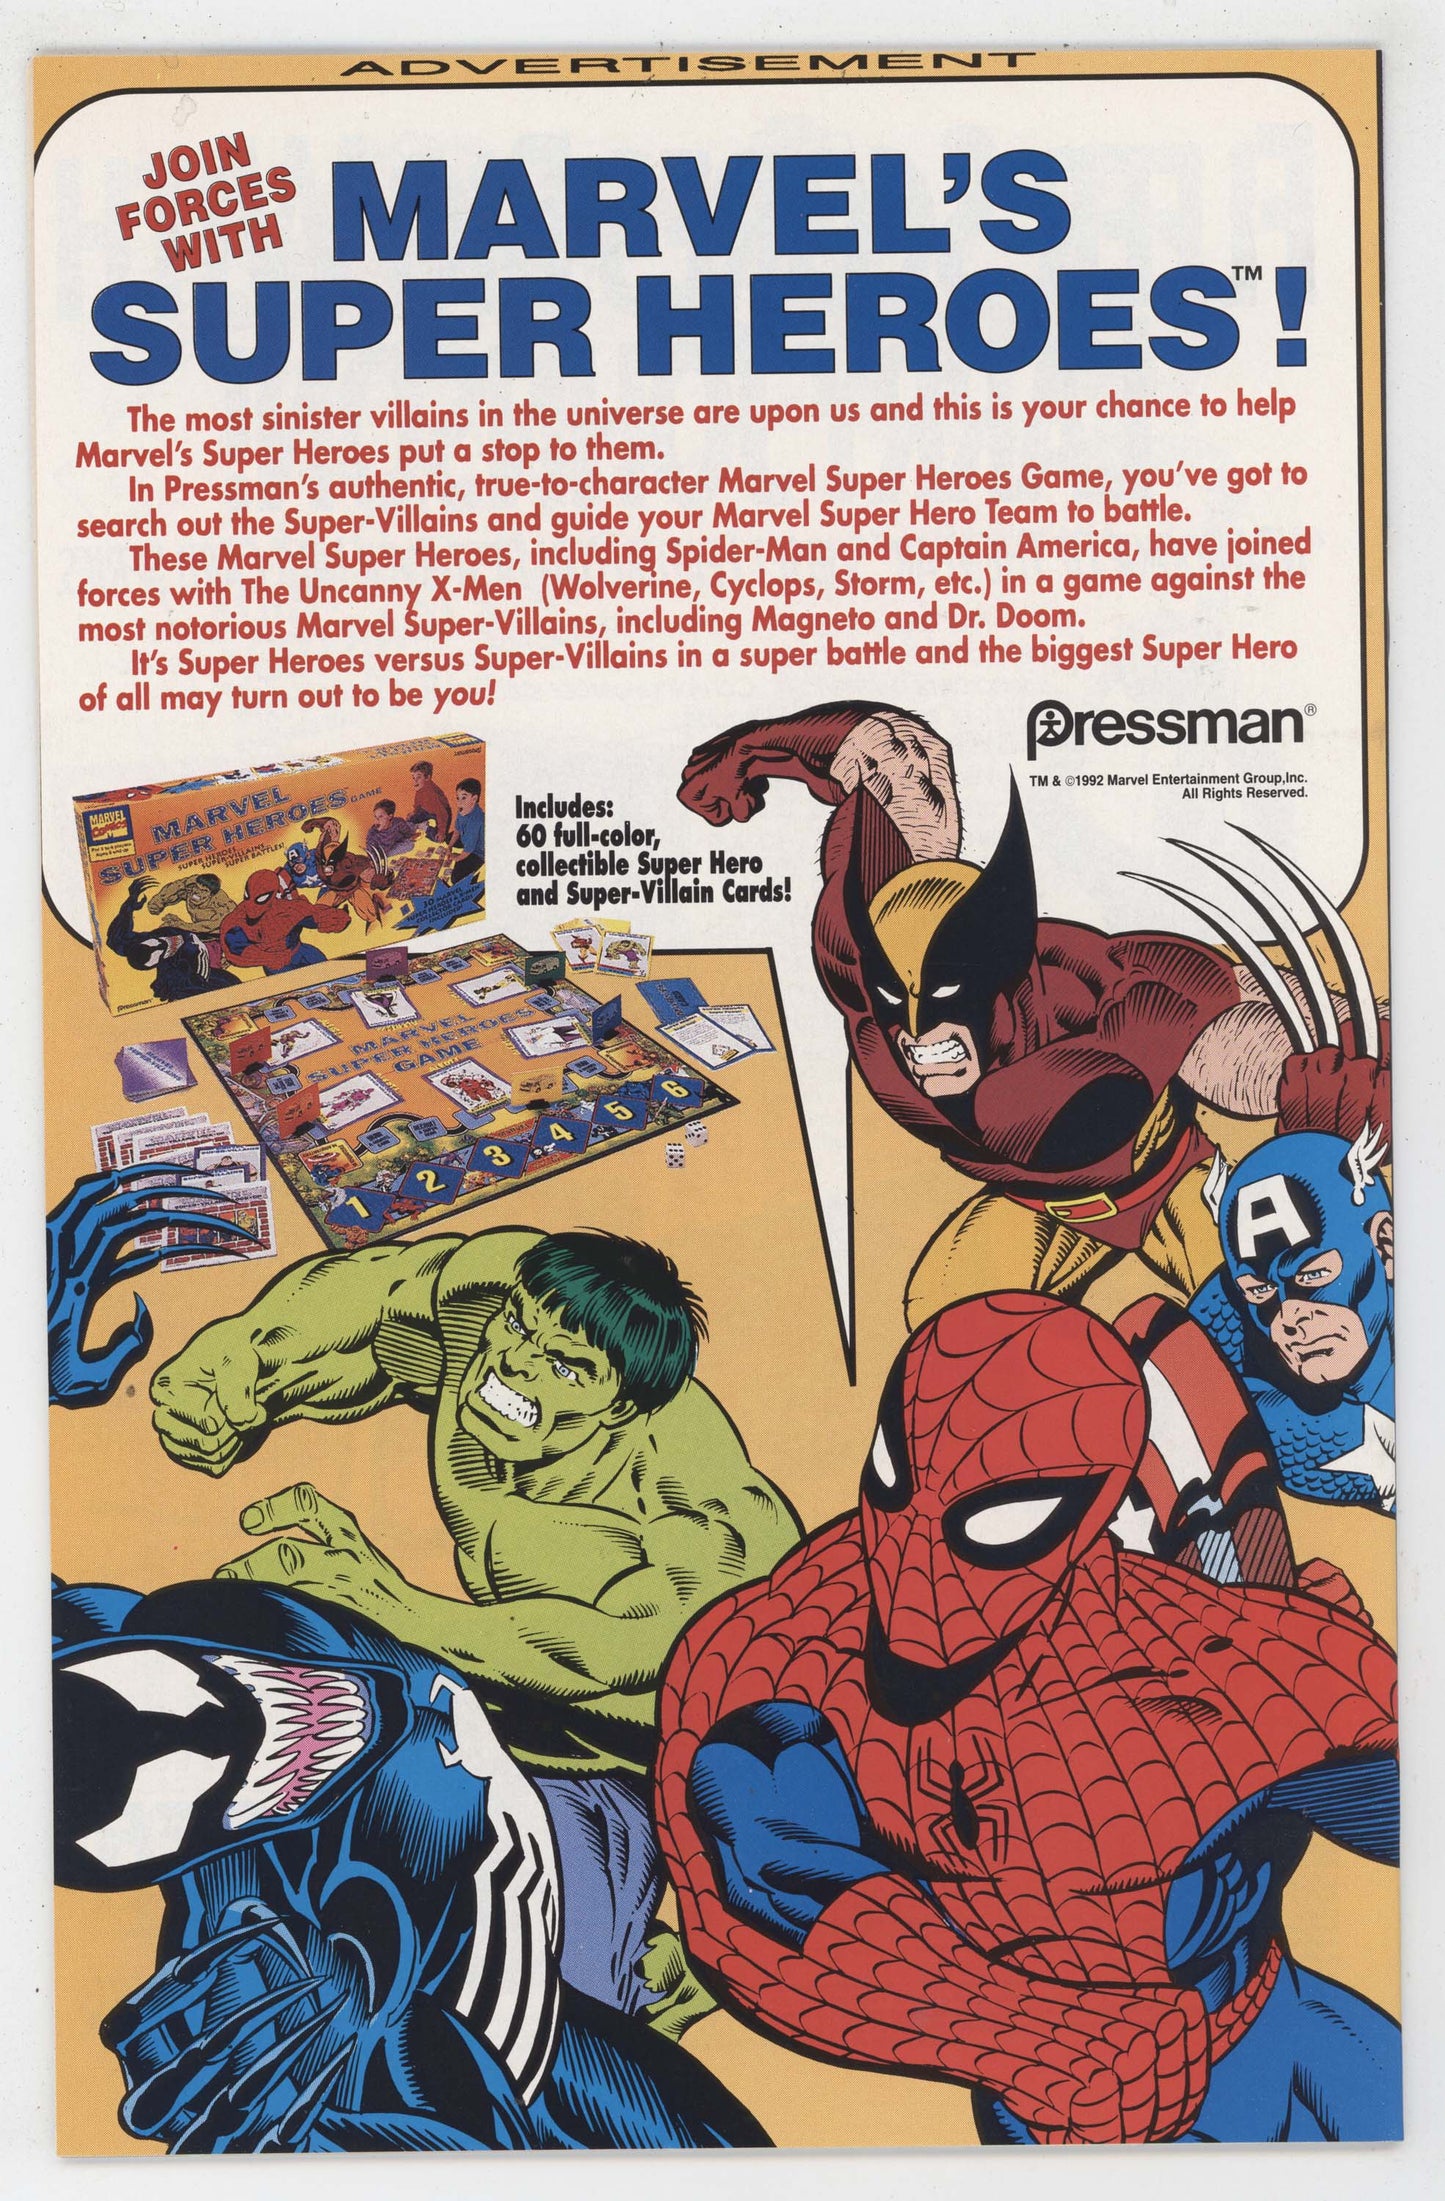 Web Of Spider-Man 95 Marvel 1992 NM + 9.6 Spirits Of Venom Ghost Rider Blaze